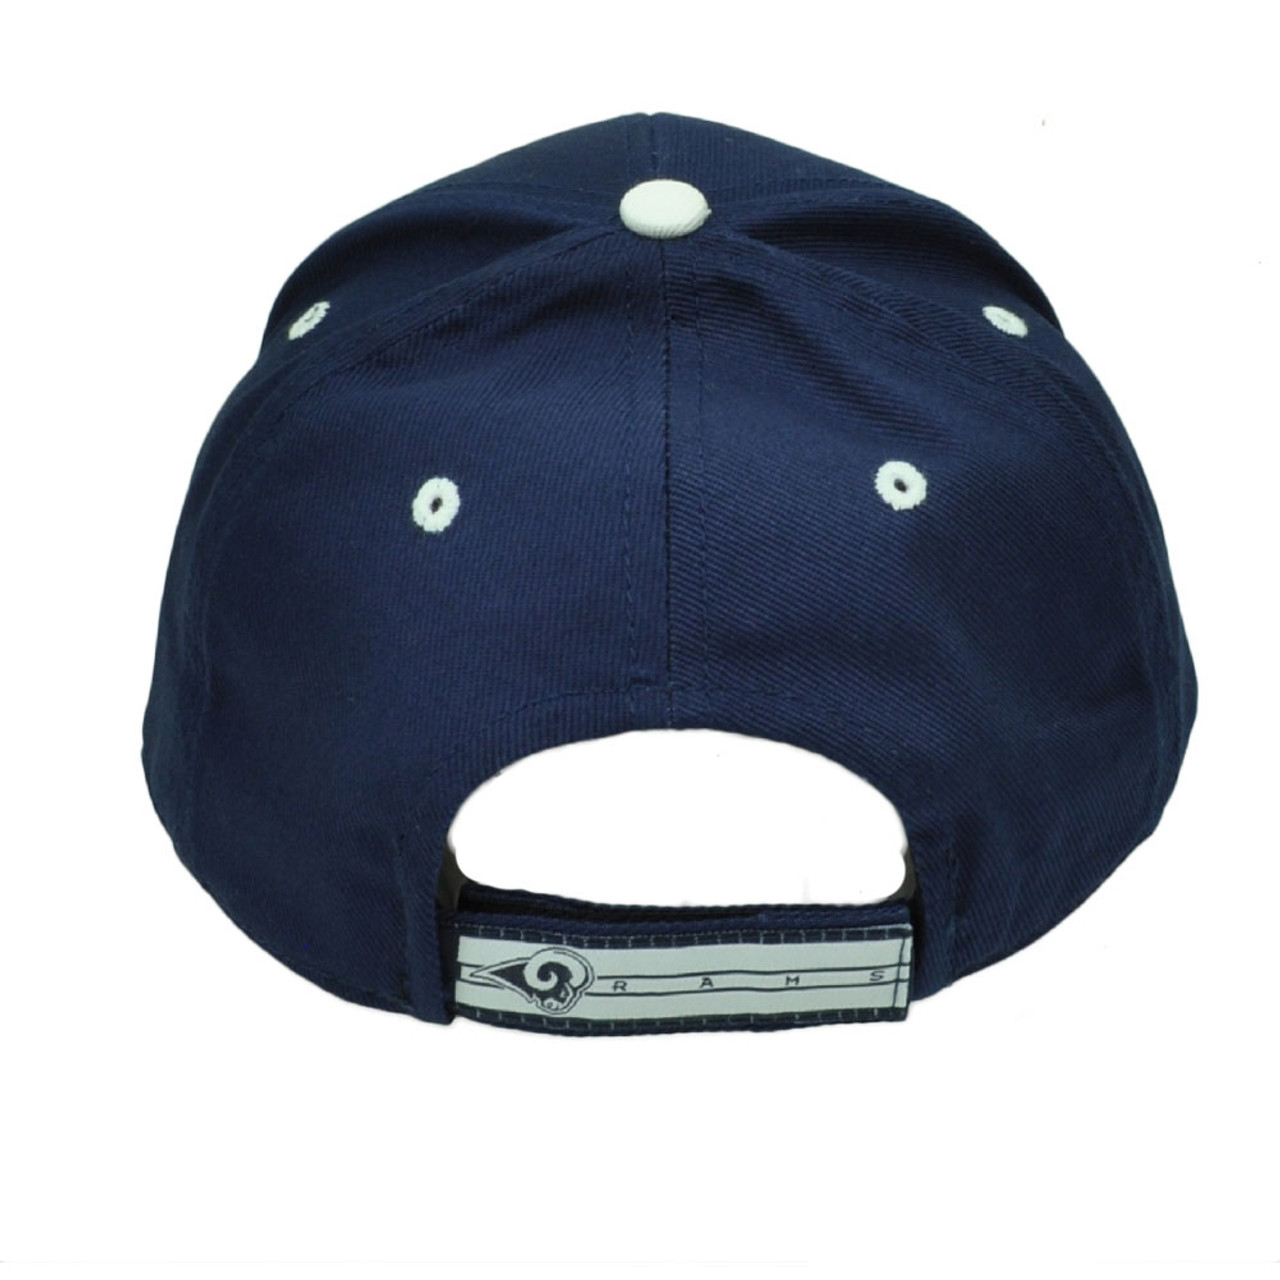 Mryumi St. Louis Battlehawks Baseball Cap Navy Blue Adjustable Snapback Hat, Women's, Size: One Size